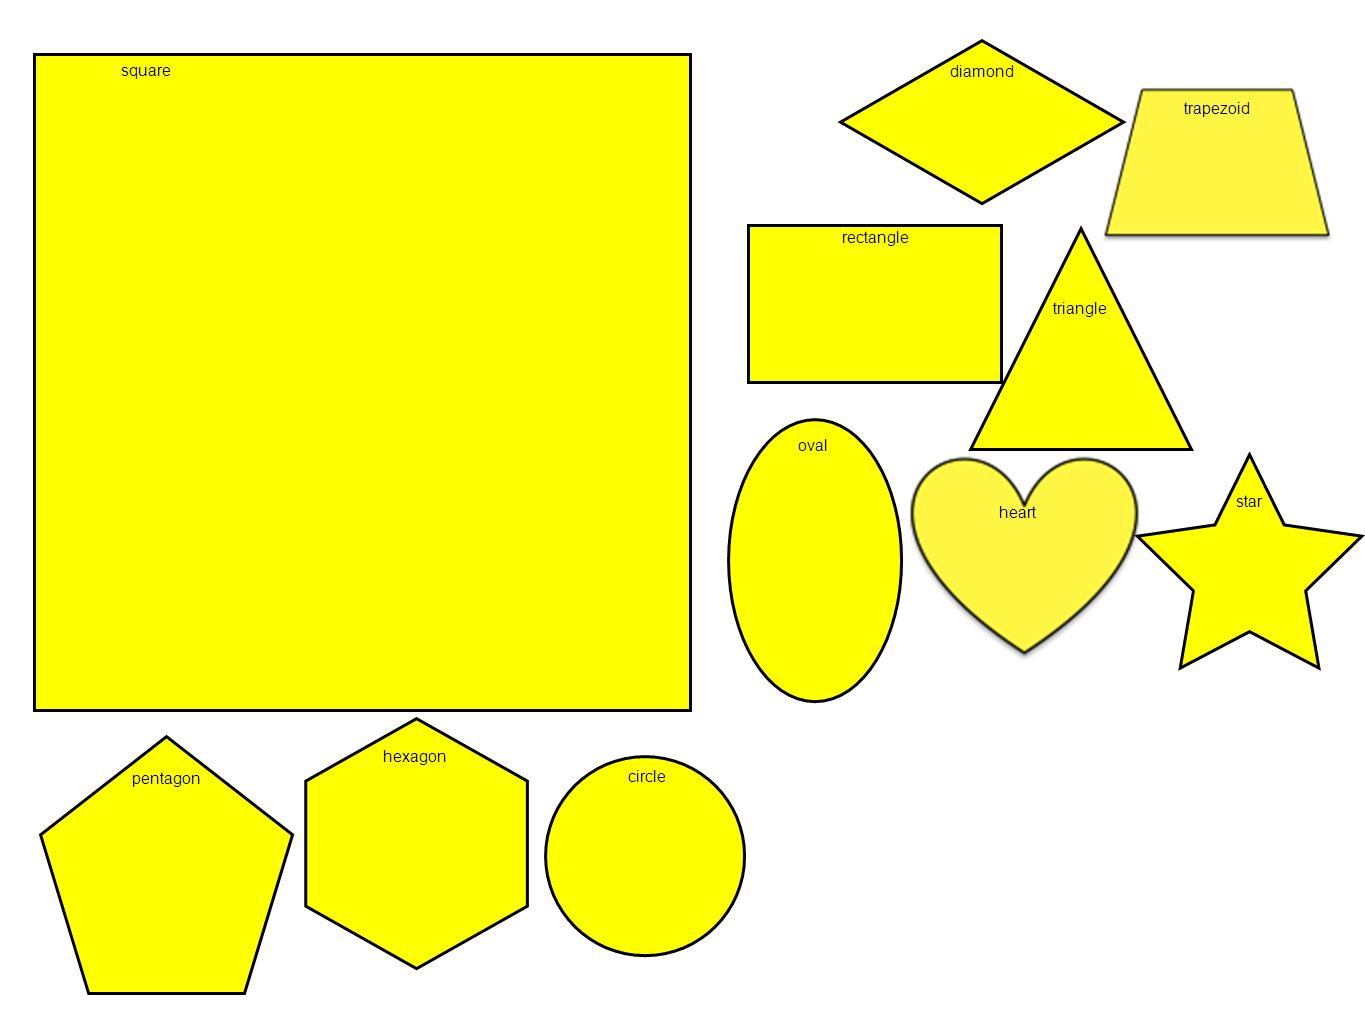 square rectangle triangle diamond trapezoid pentagon hexagon circle oval heart star